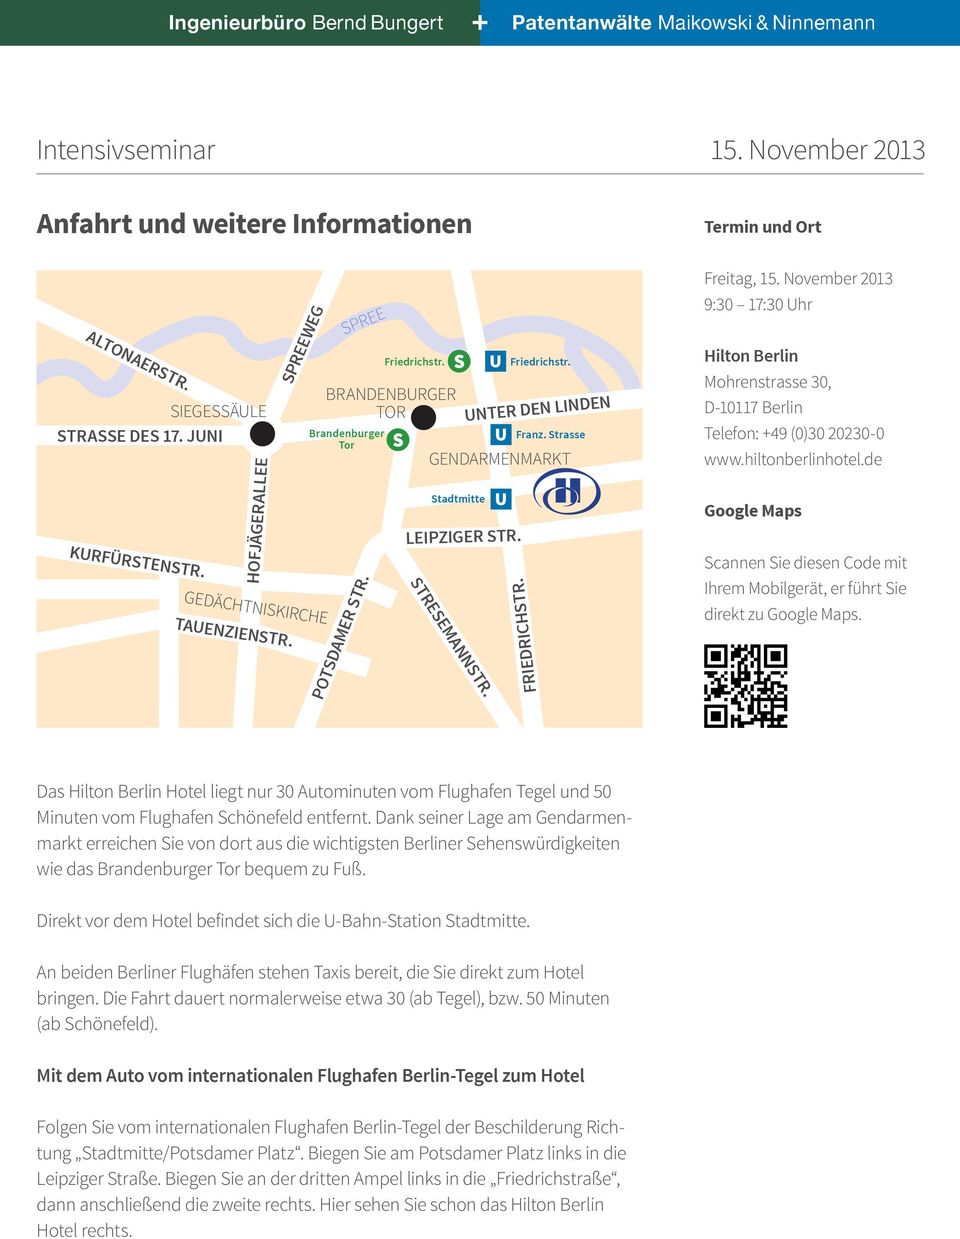 Strasse Termin und Ort Freitag, 15. November 2013 9:30 17:30 Uhr Hilton Berlin Mohrenstrasse 30, D-10117 Berlin Telefon: +49 (0)30 20230-0 www.hiltonberlinhotel.